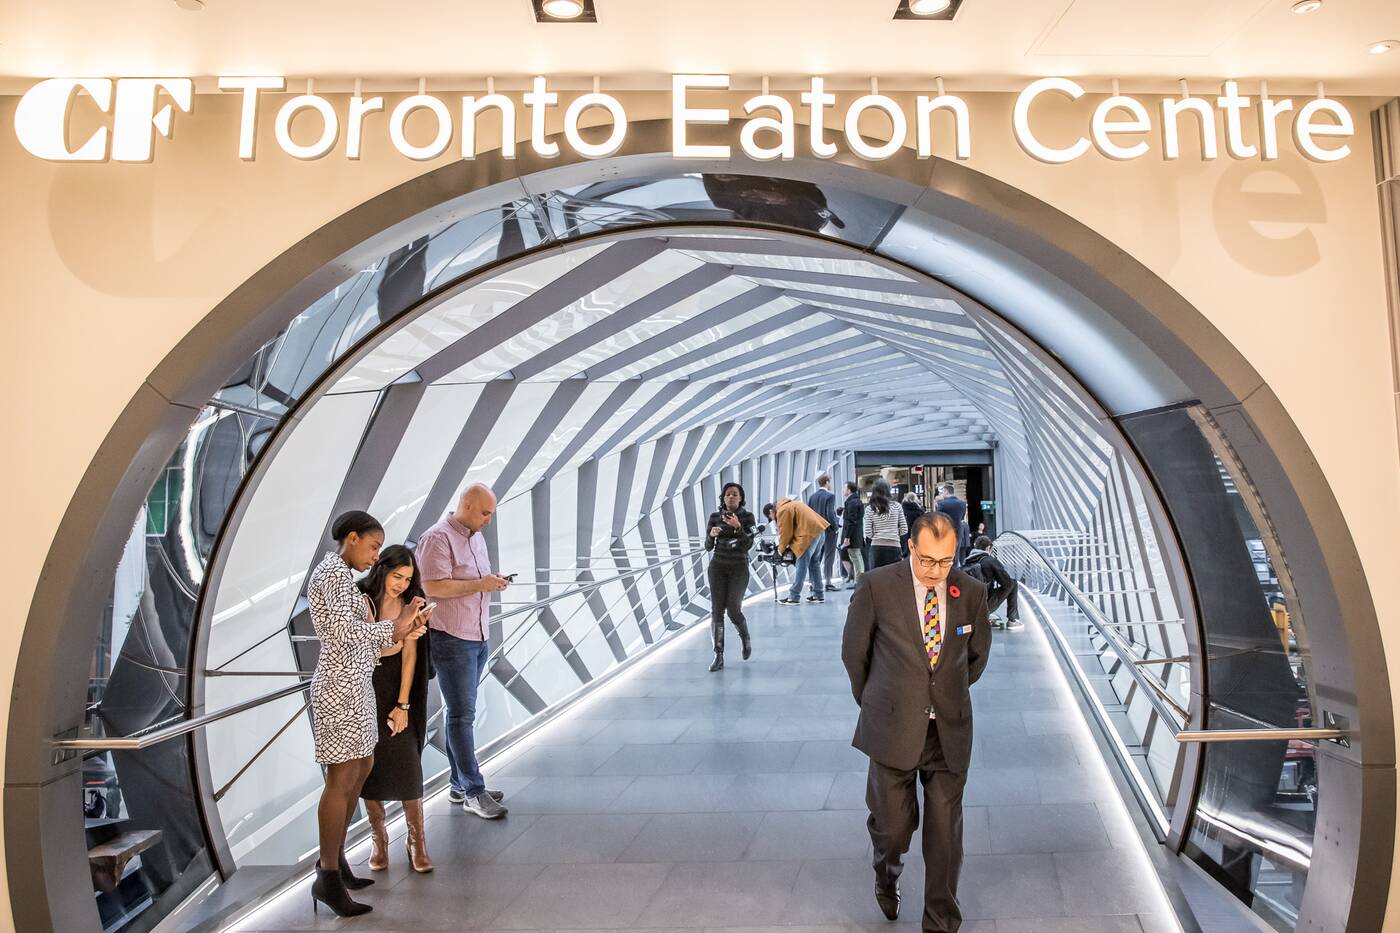 CF Toronto Eaton Centre Bridge Twists Across Busy Thoroughfare, 2019-11-04